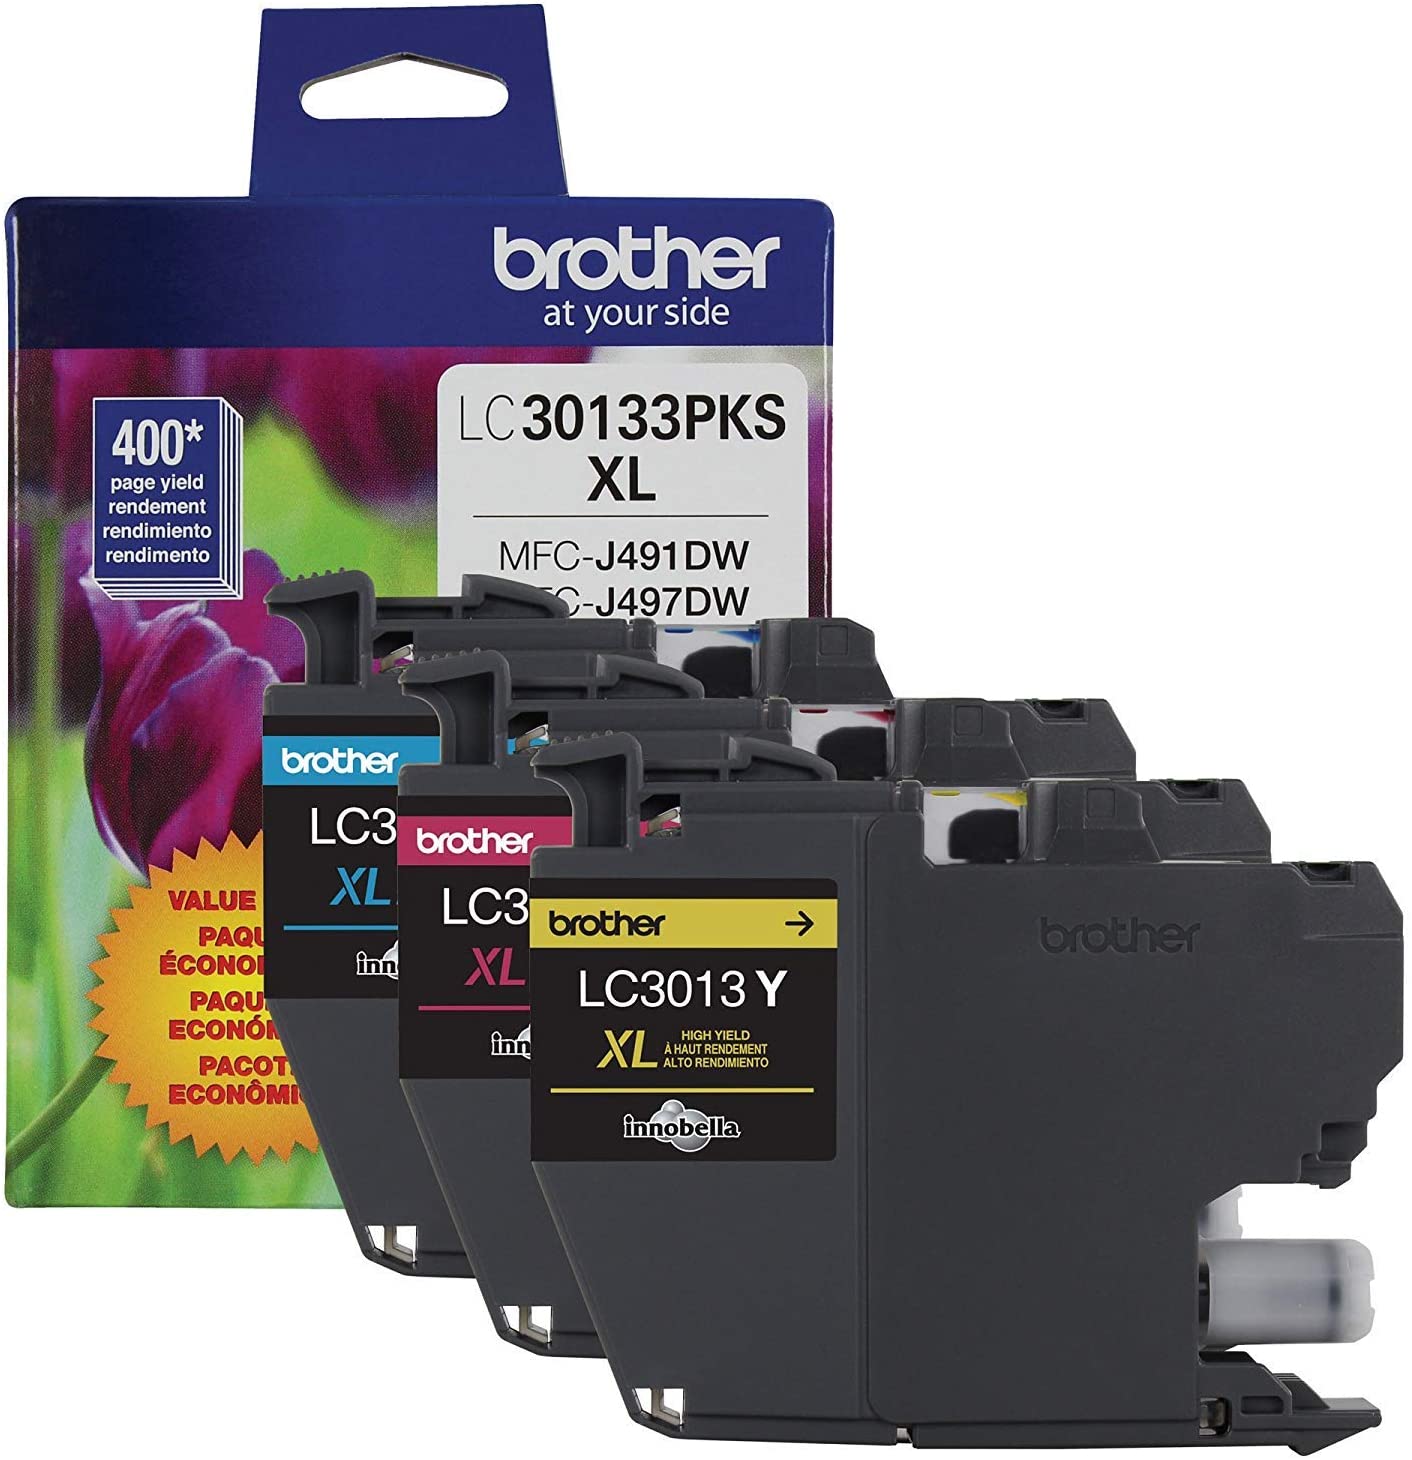 Absolute Toner LC30133PKS C/M/Y HY 3PK INK FORMFCJ491DW, MFC690DW 0.4K/EA Brother Ink Cartridges